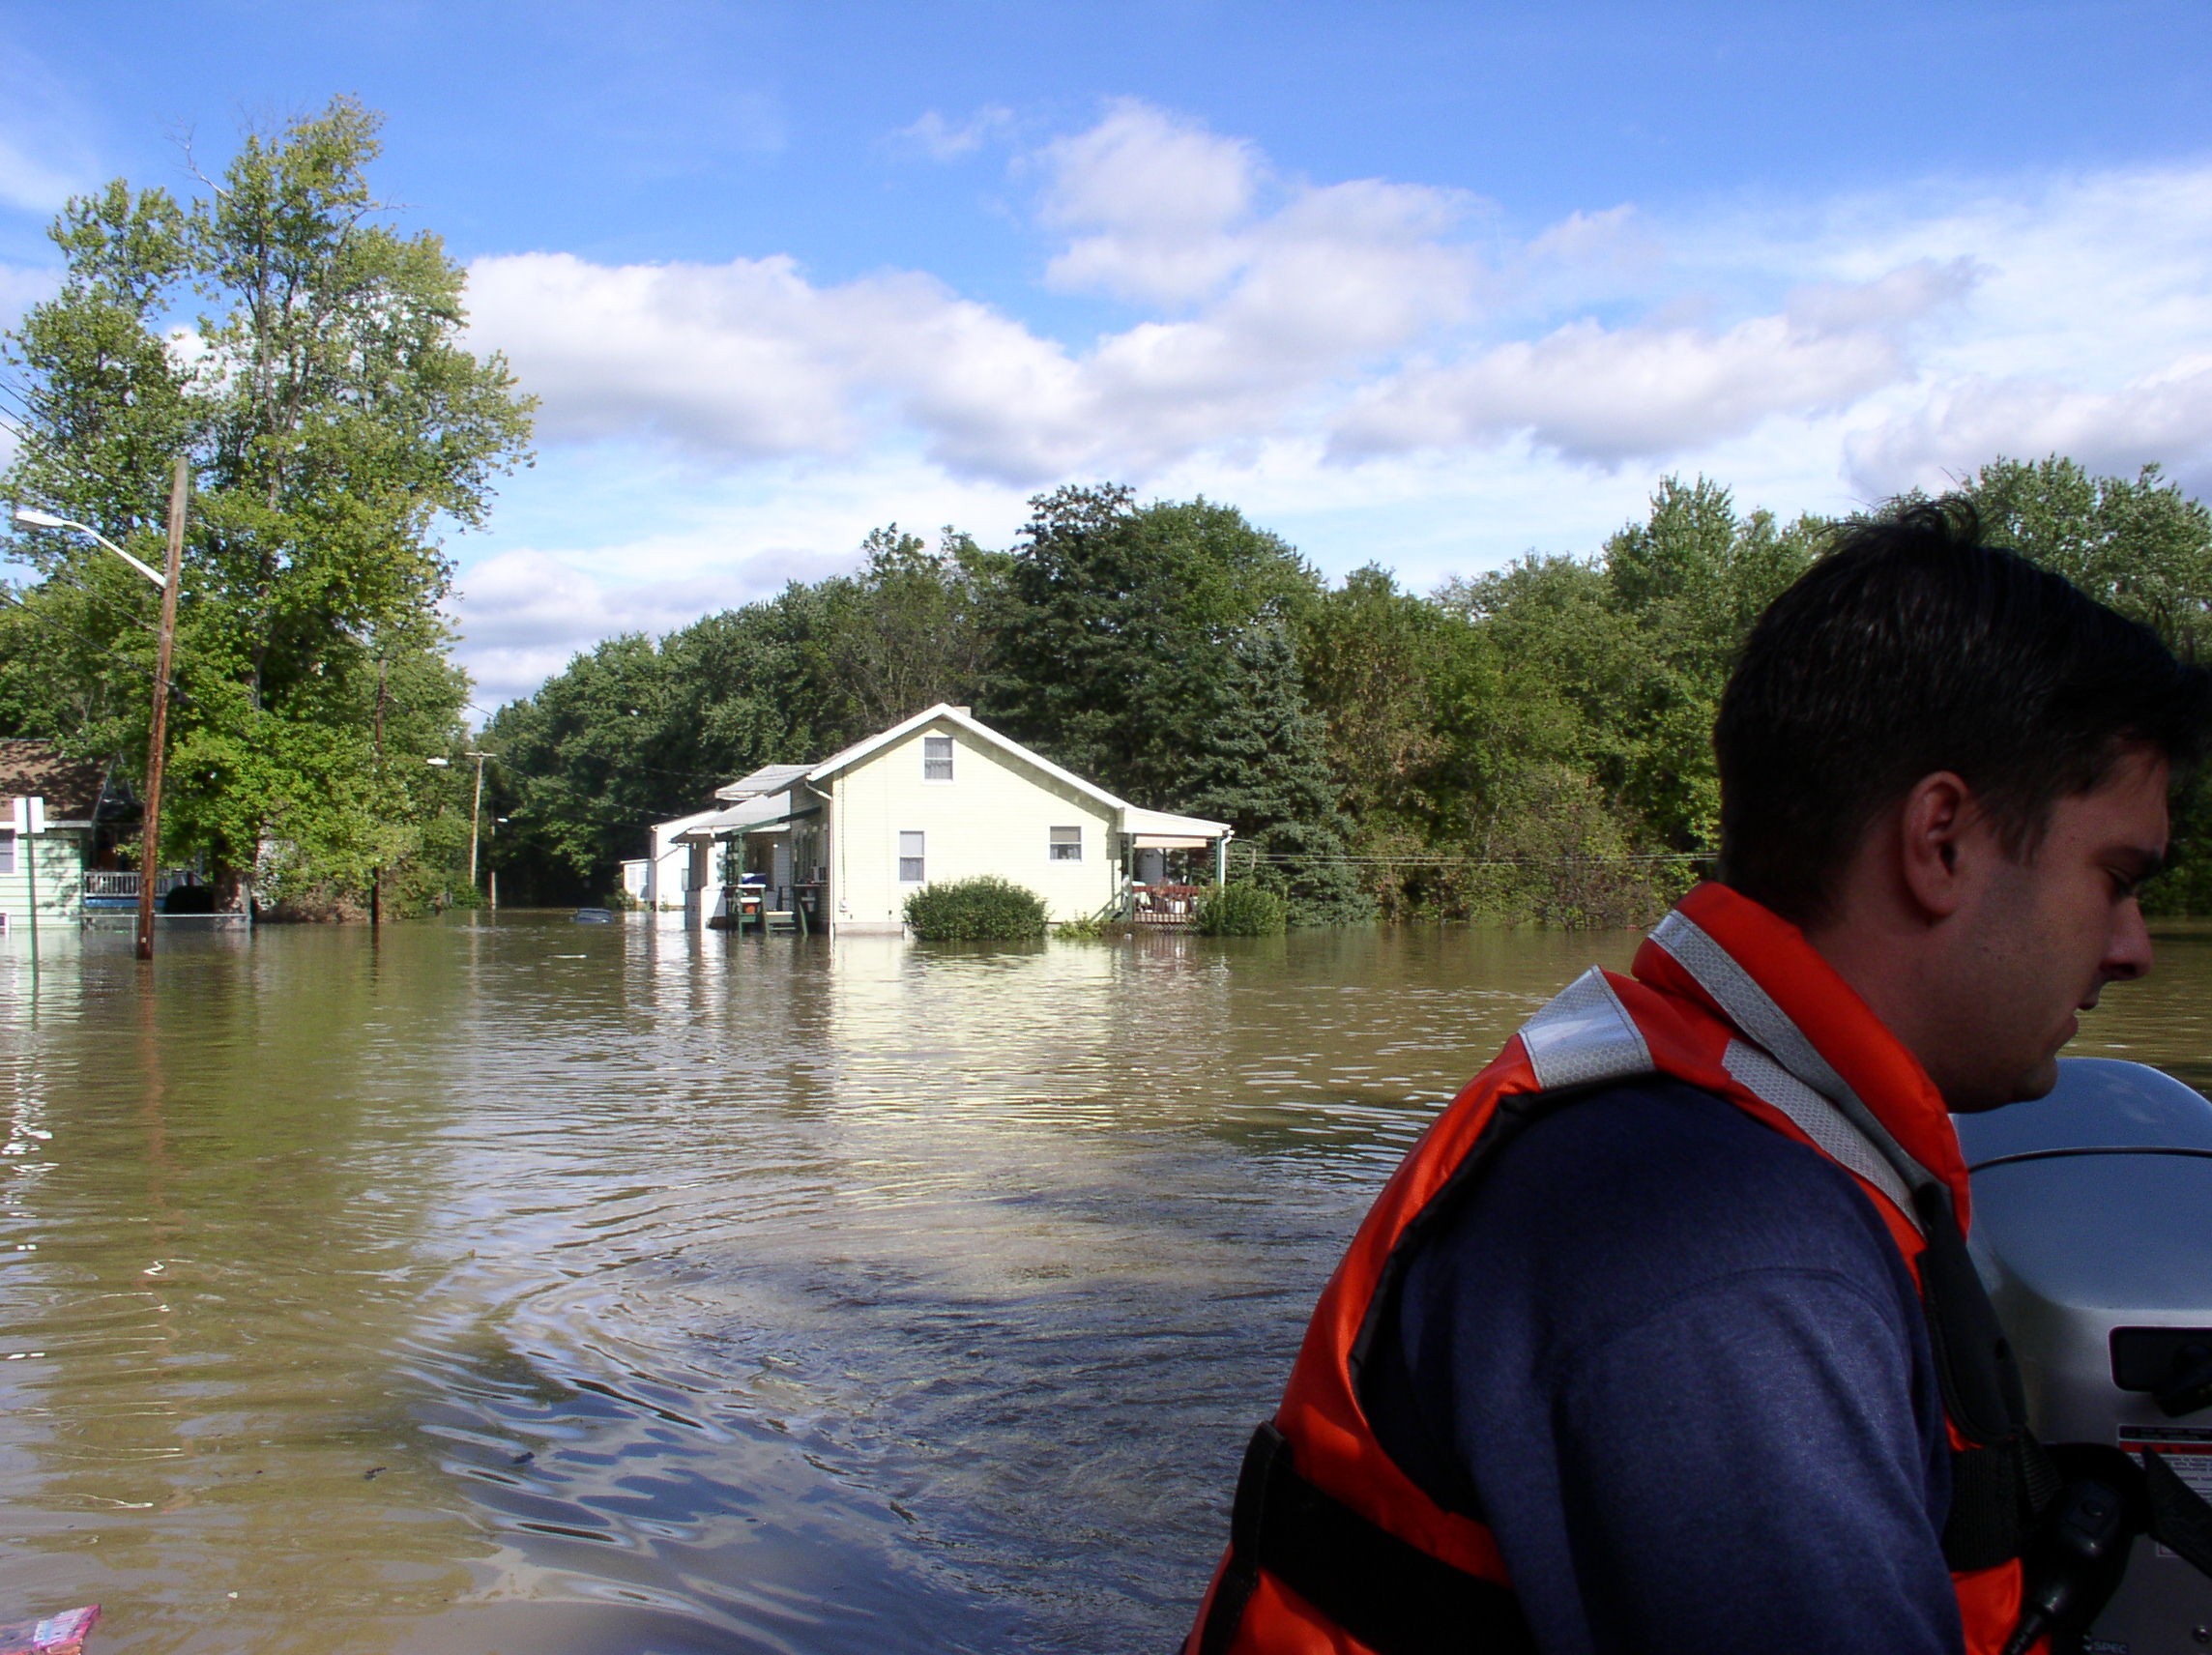 09-18-04  Response - Flooding